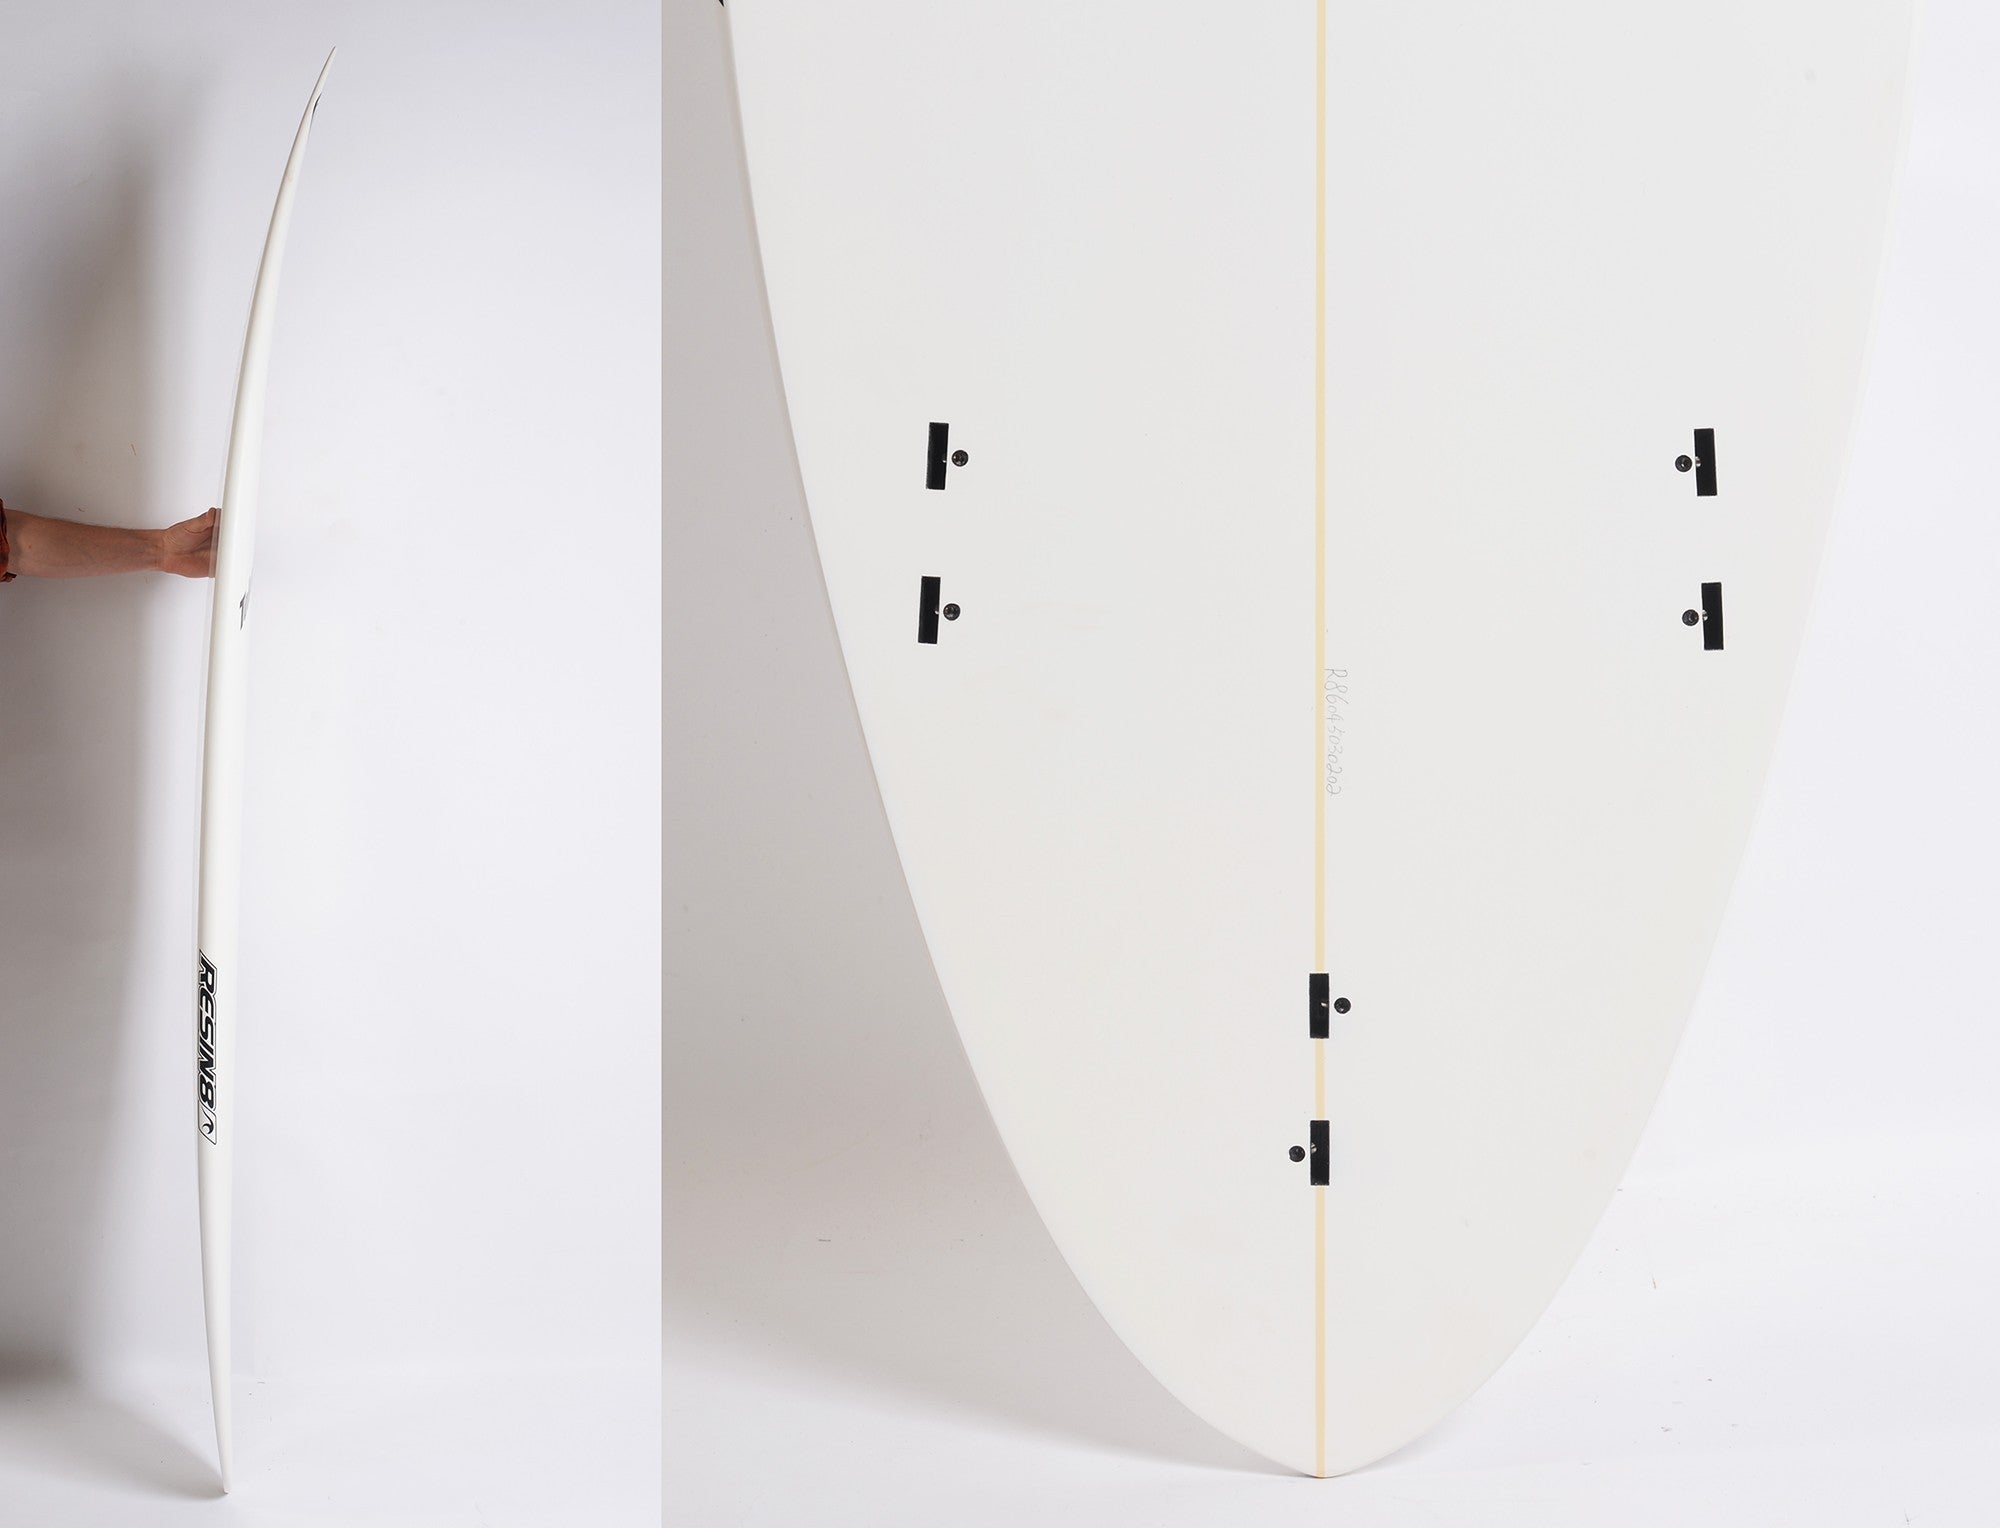 Planche de surf RESIN8 Wade Tokoro (epoxy) - Blanc